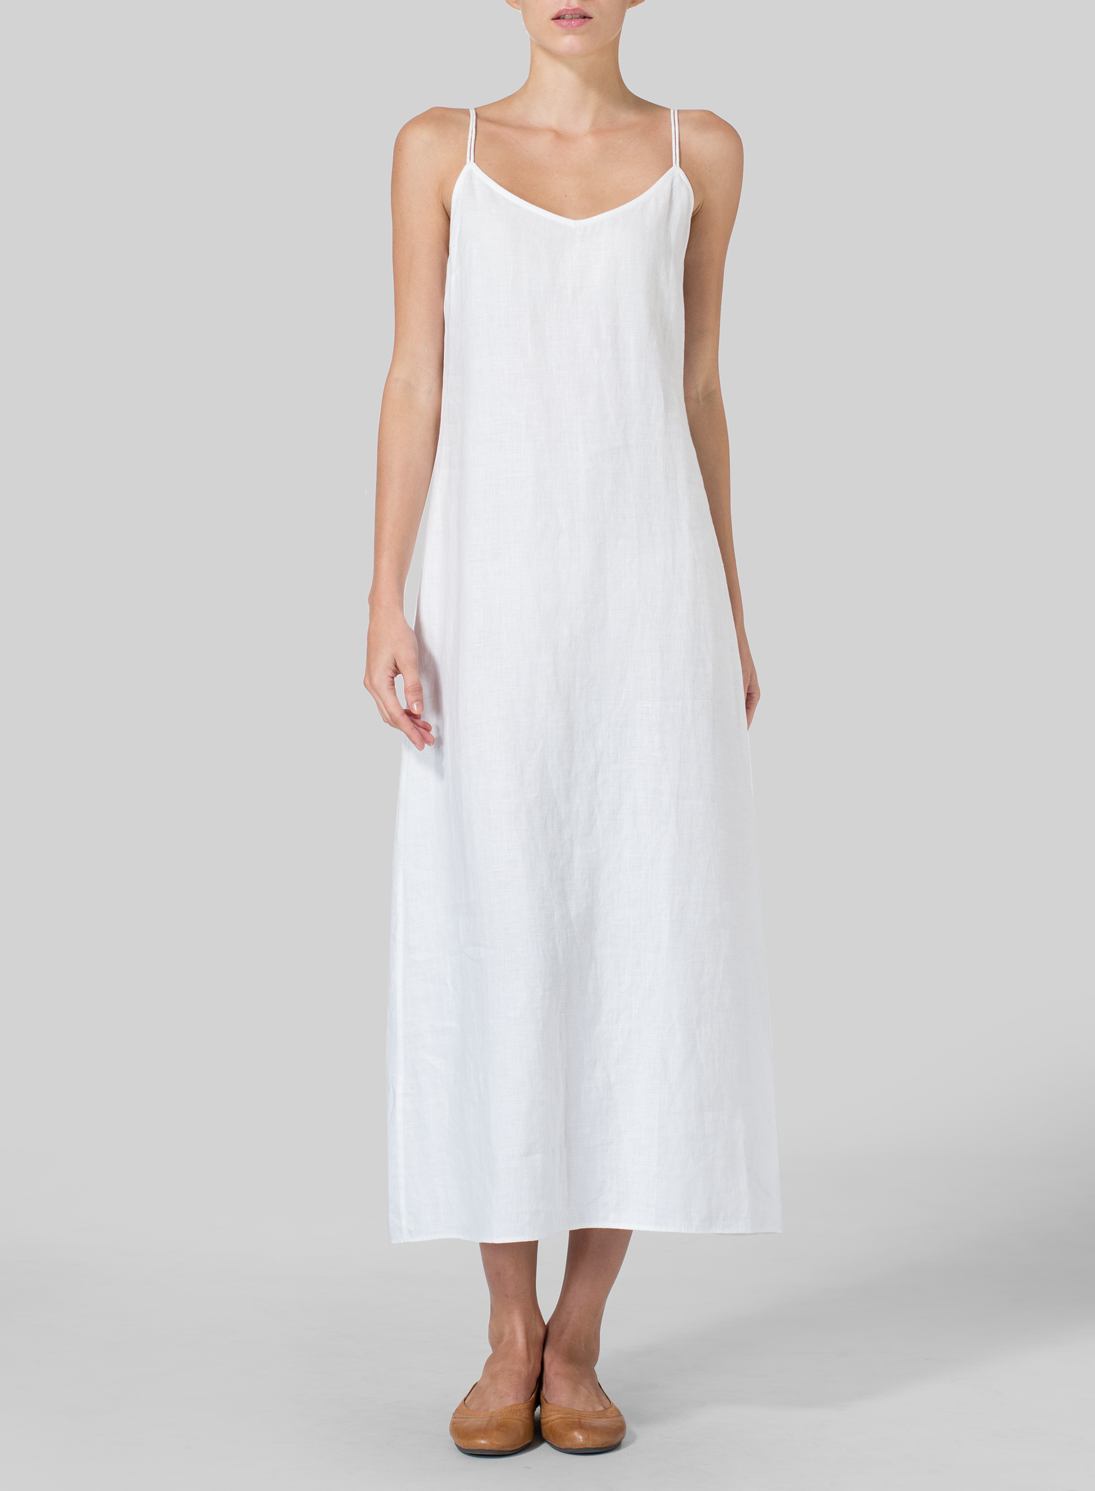 Art Class Girls Size L 10/12 Sleeveless Smocked Dress White Lined Spagetti  Strap